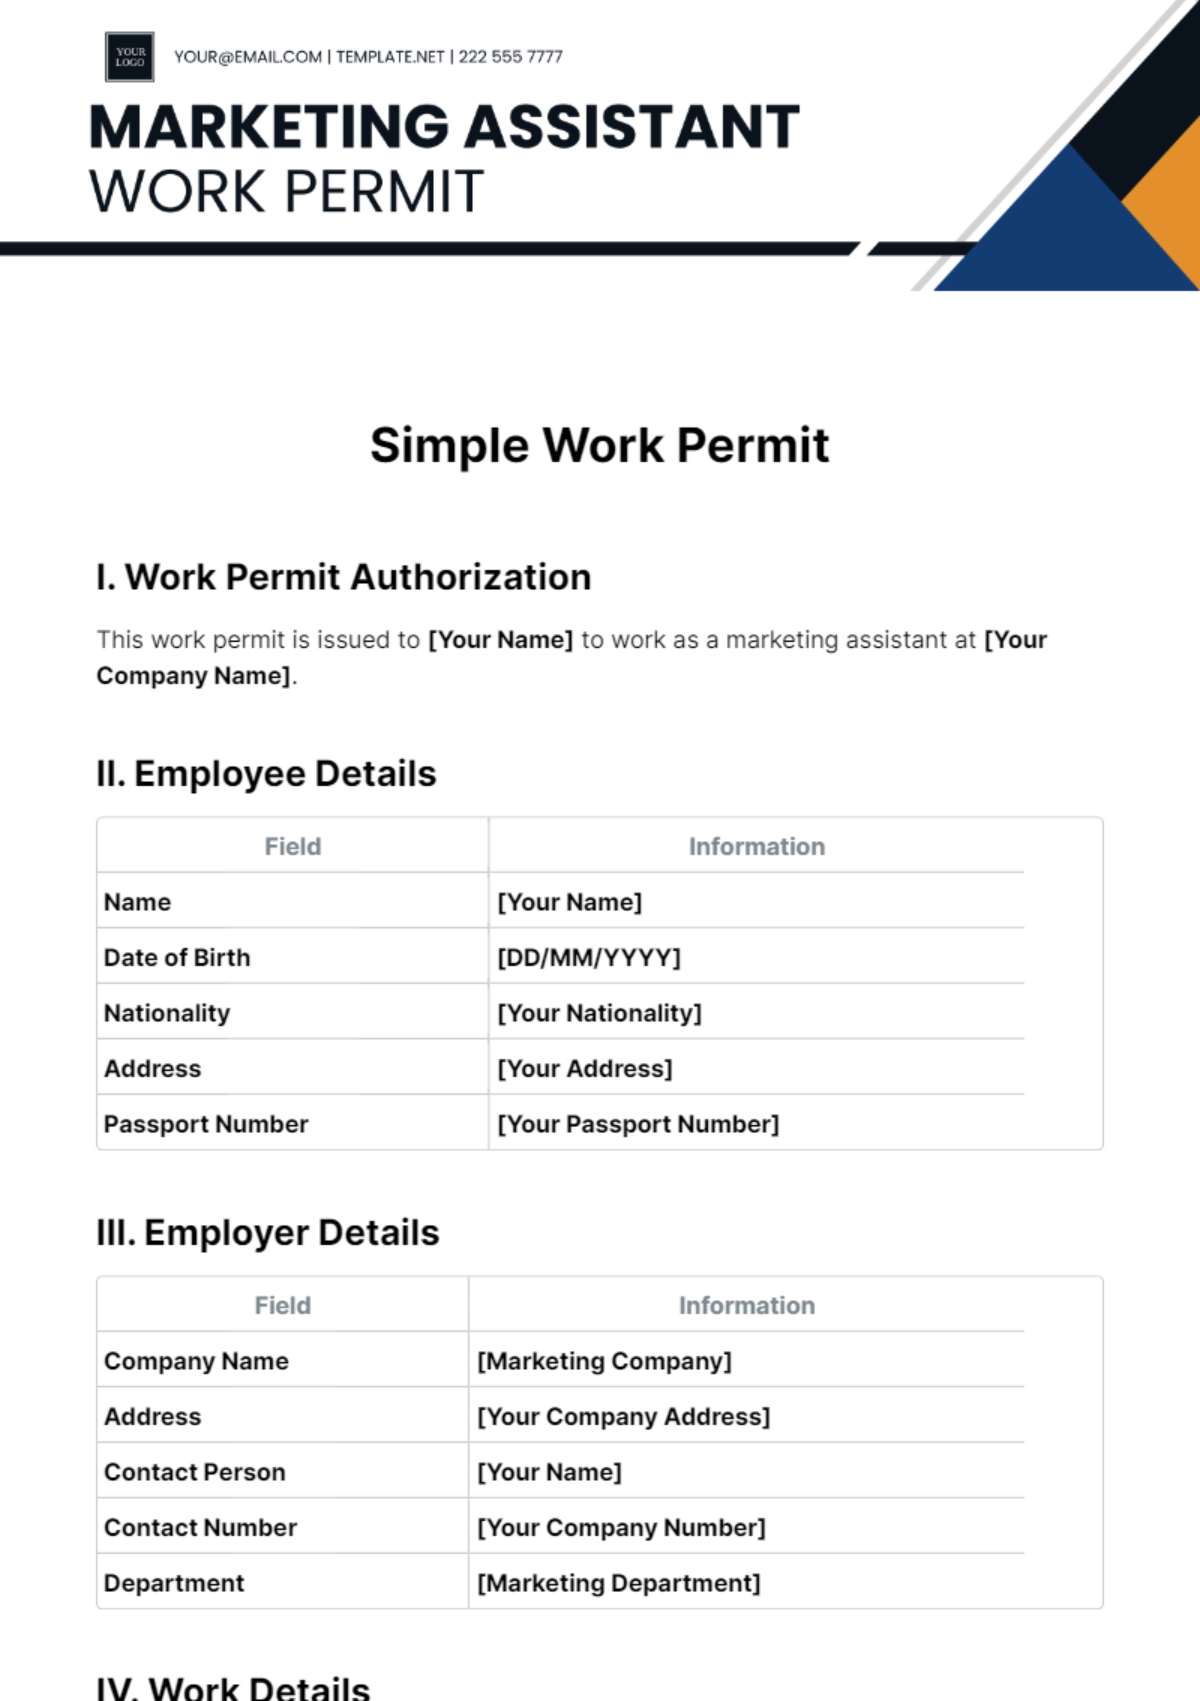 Simple Work Permit Template